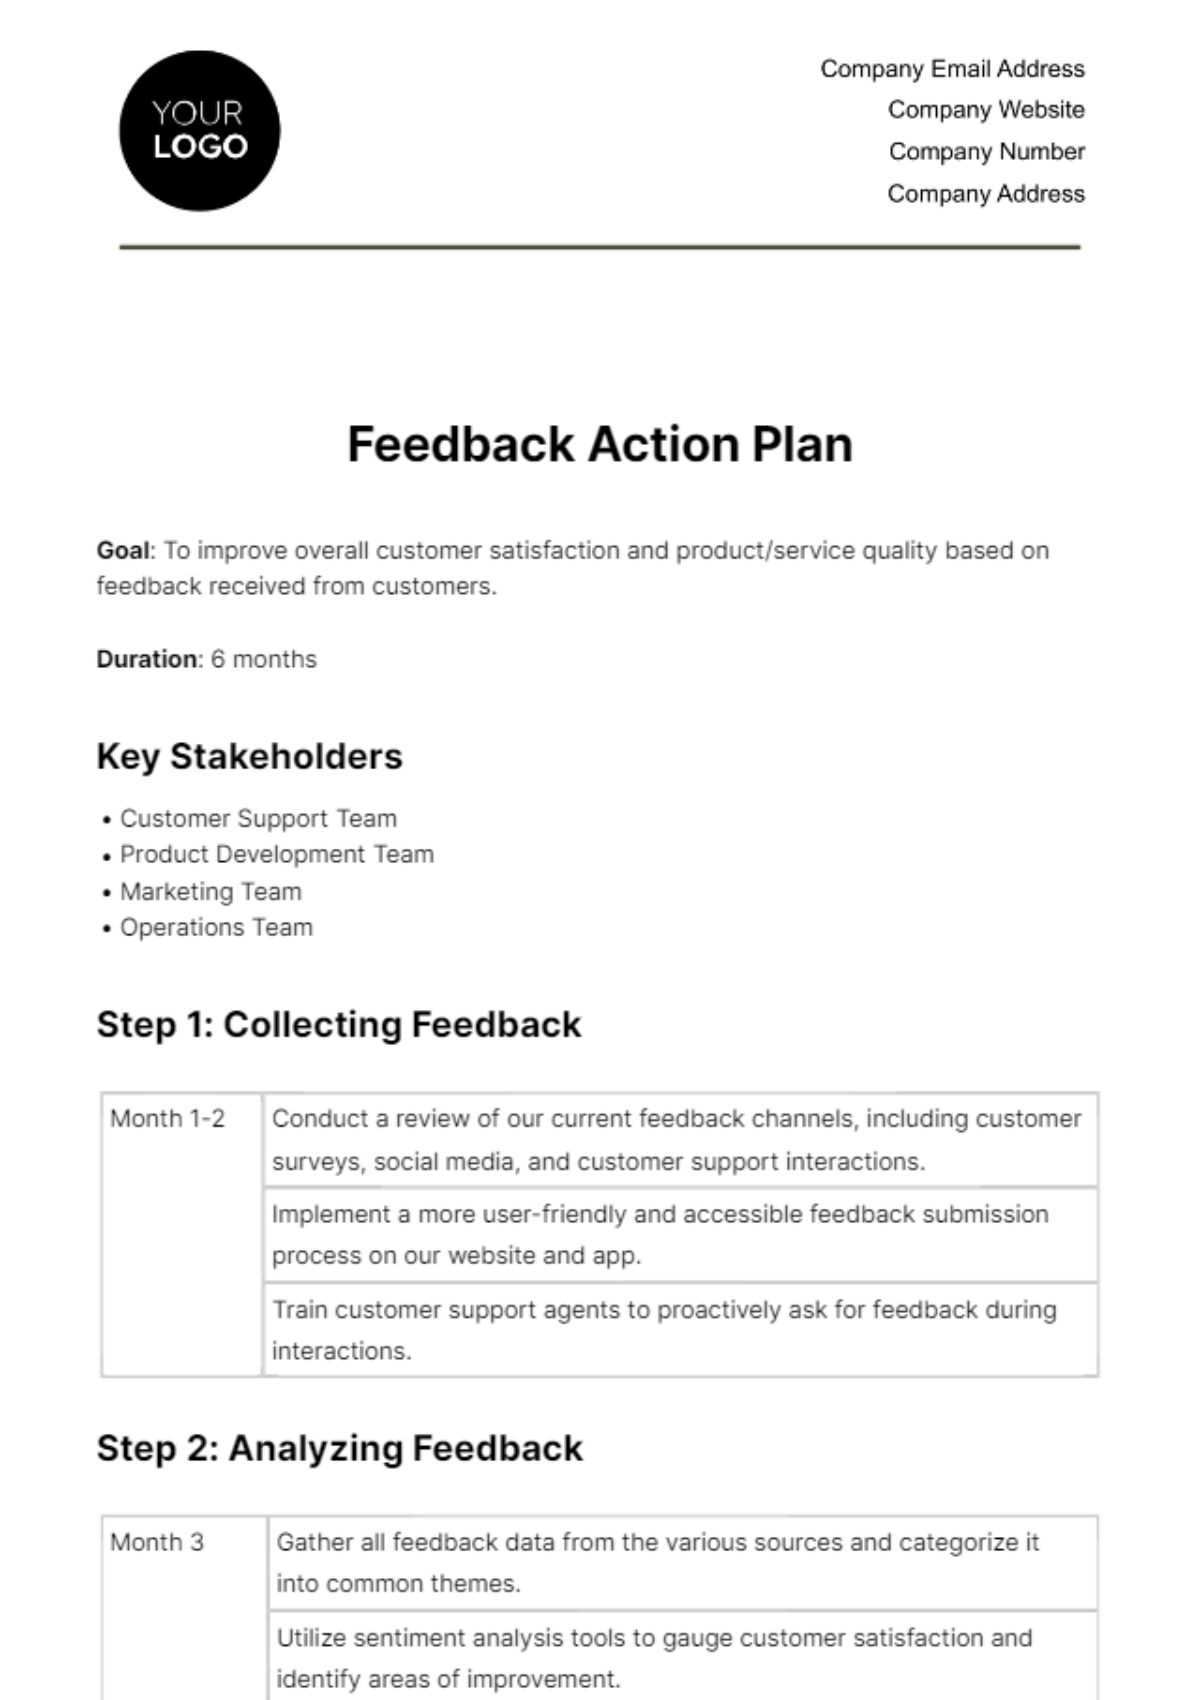 Feedback Action Plan HR Template